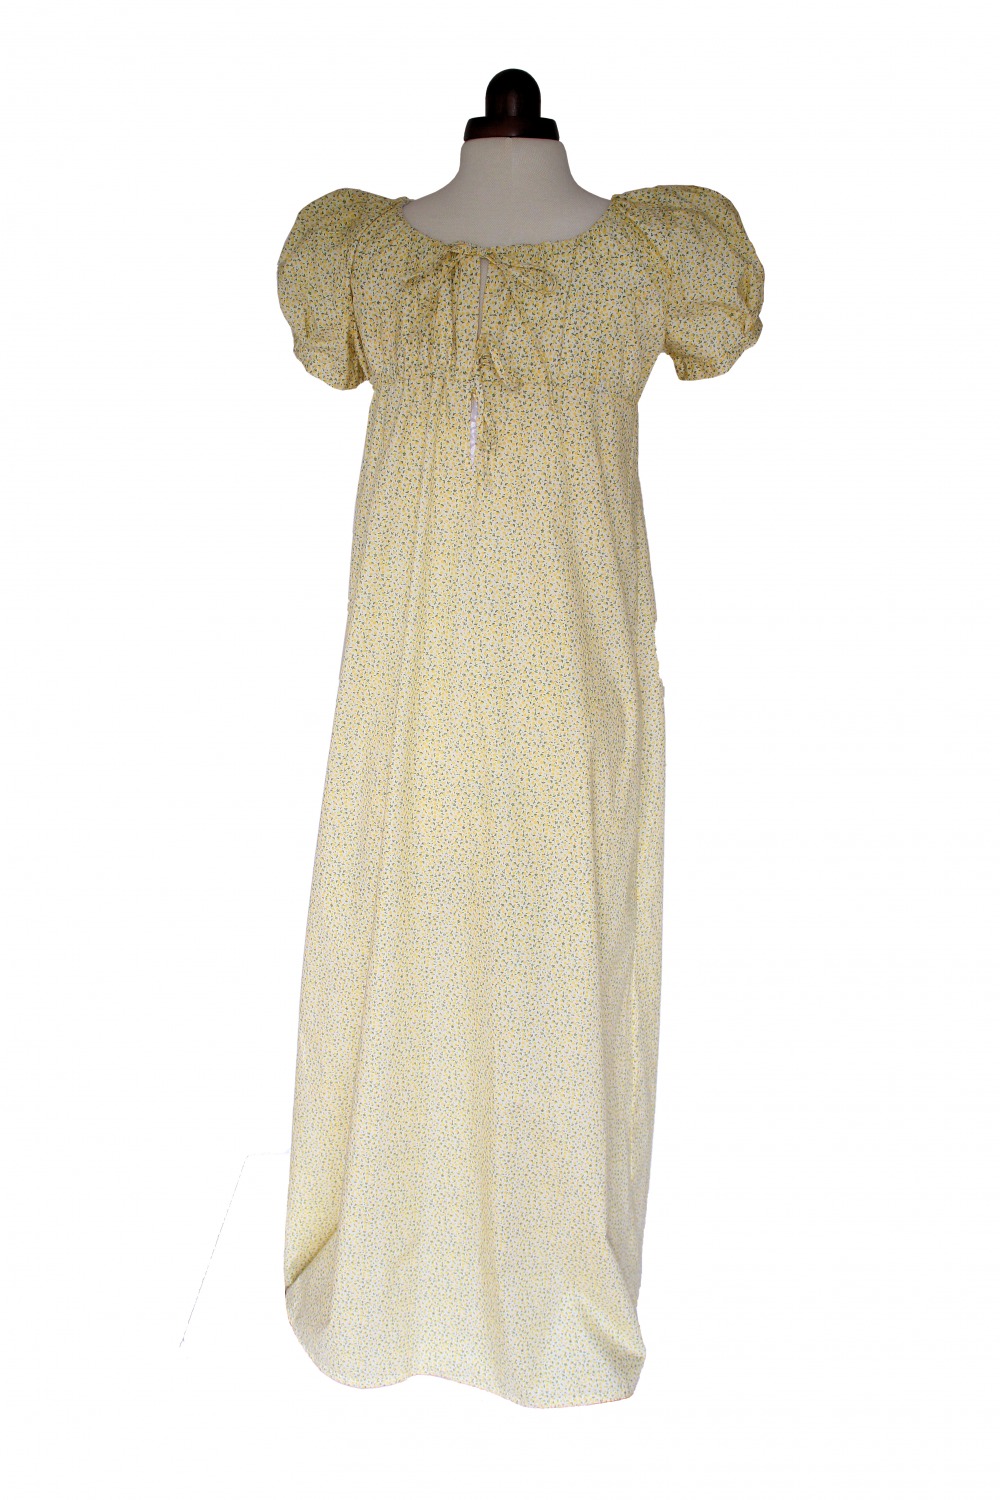 Ladies 18th 19th Century Regency Jane Austen Day Costume Size 10 - 12 Image